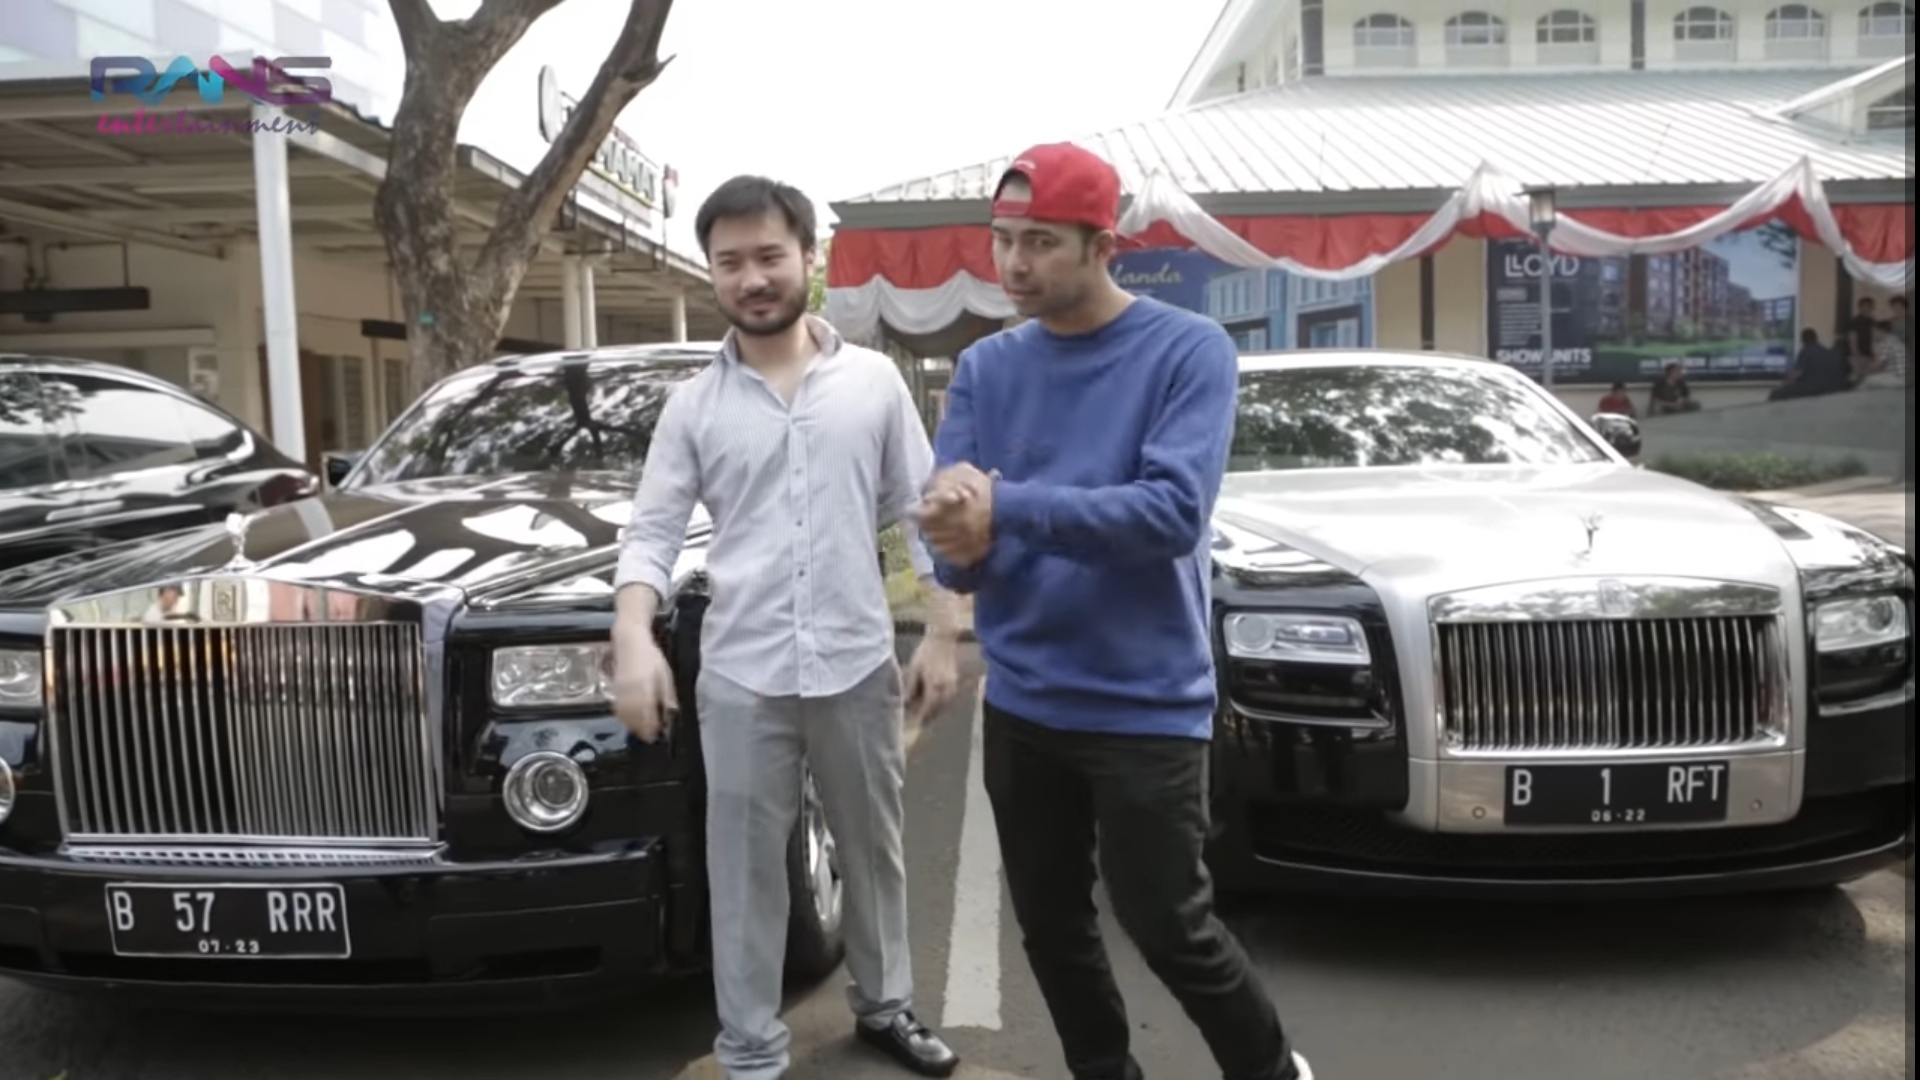 Dolar Lagi Sangar, Raffi Ahmad Naksir Mobil yang Emblemnya Aja Seharga Xpander